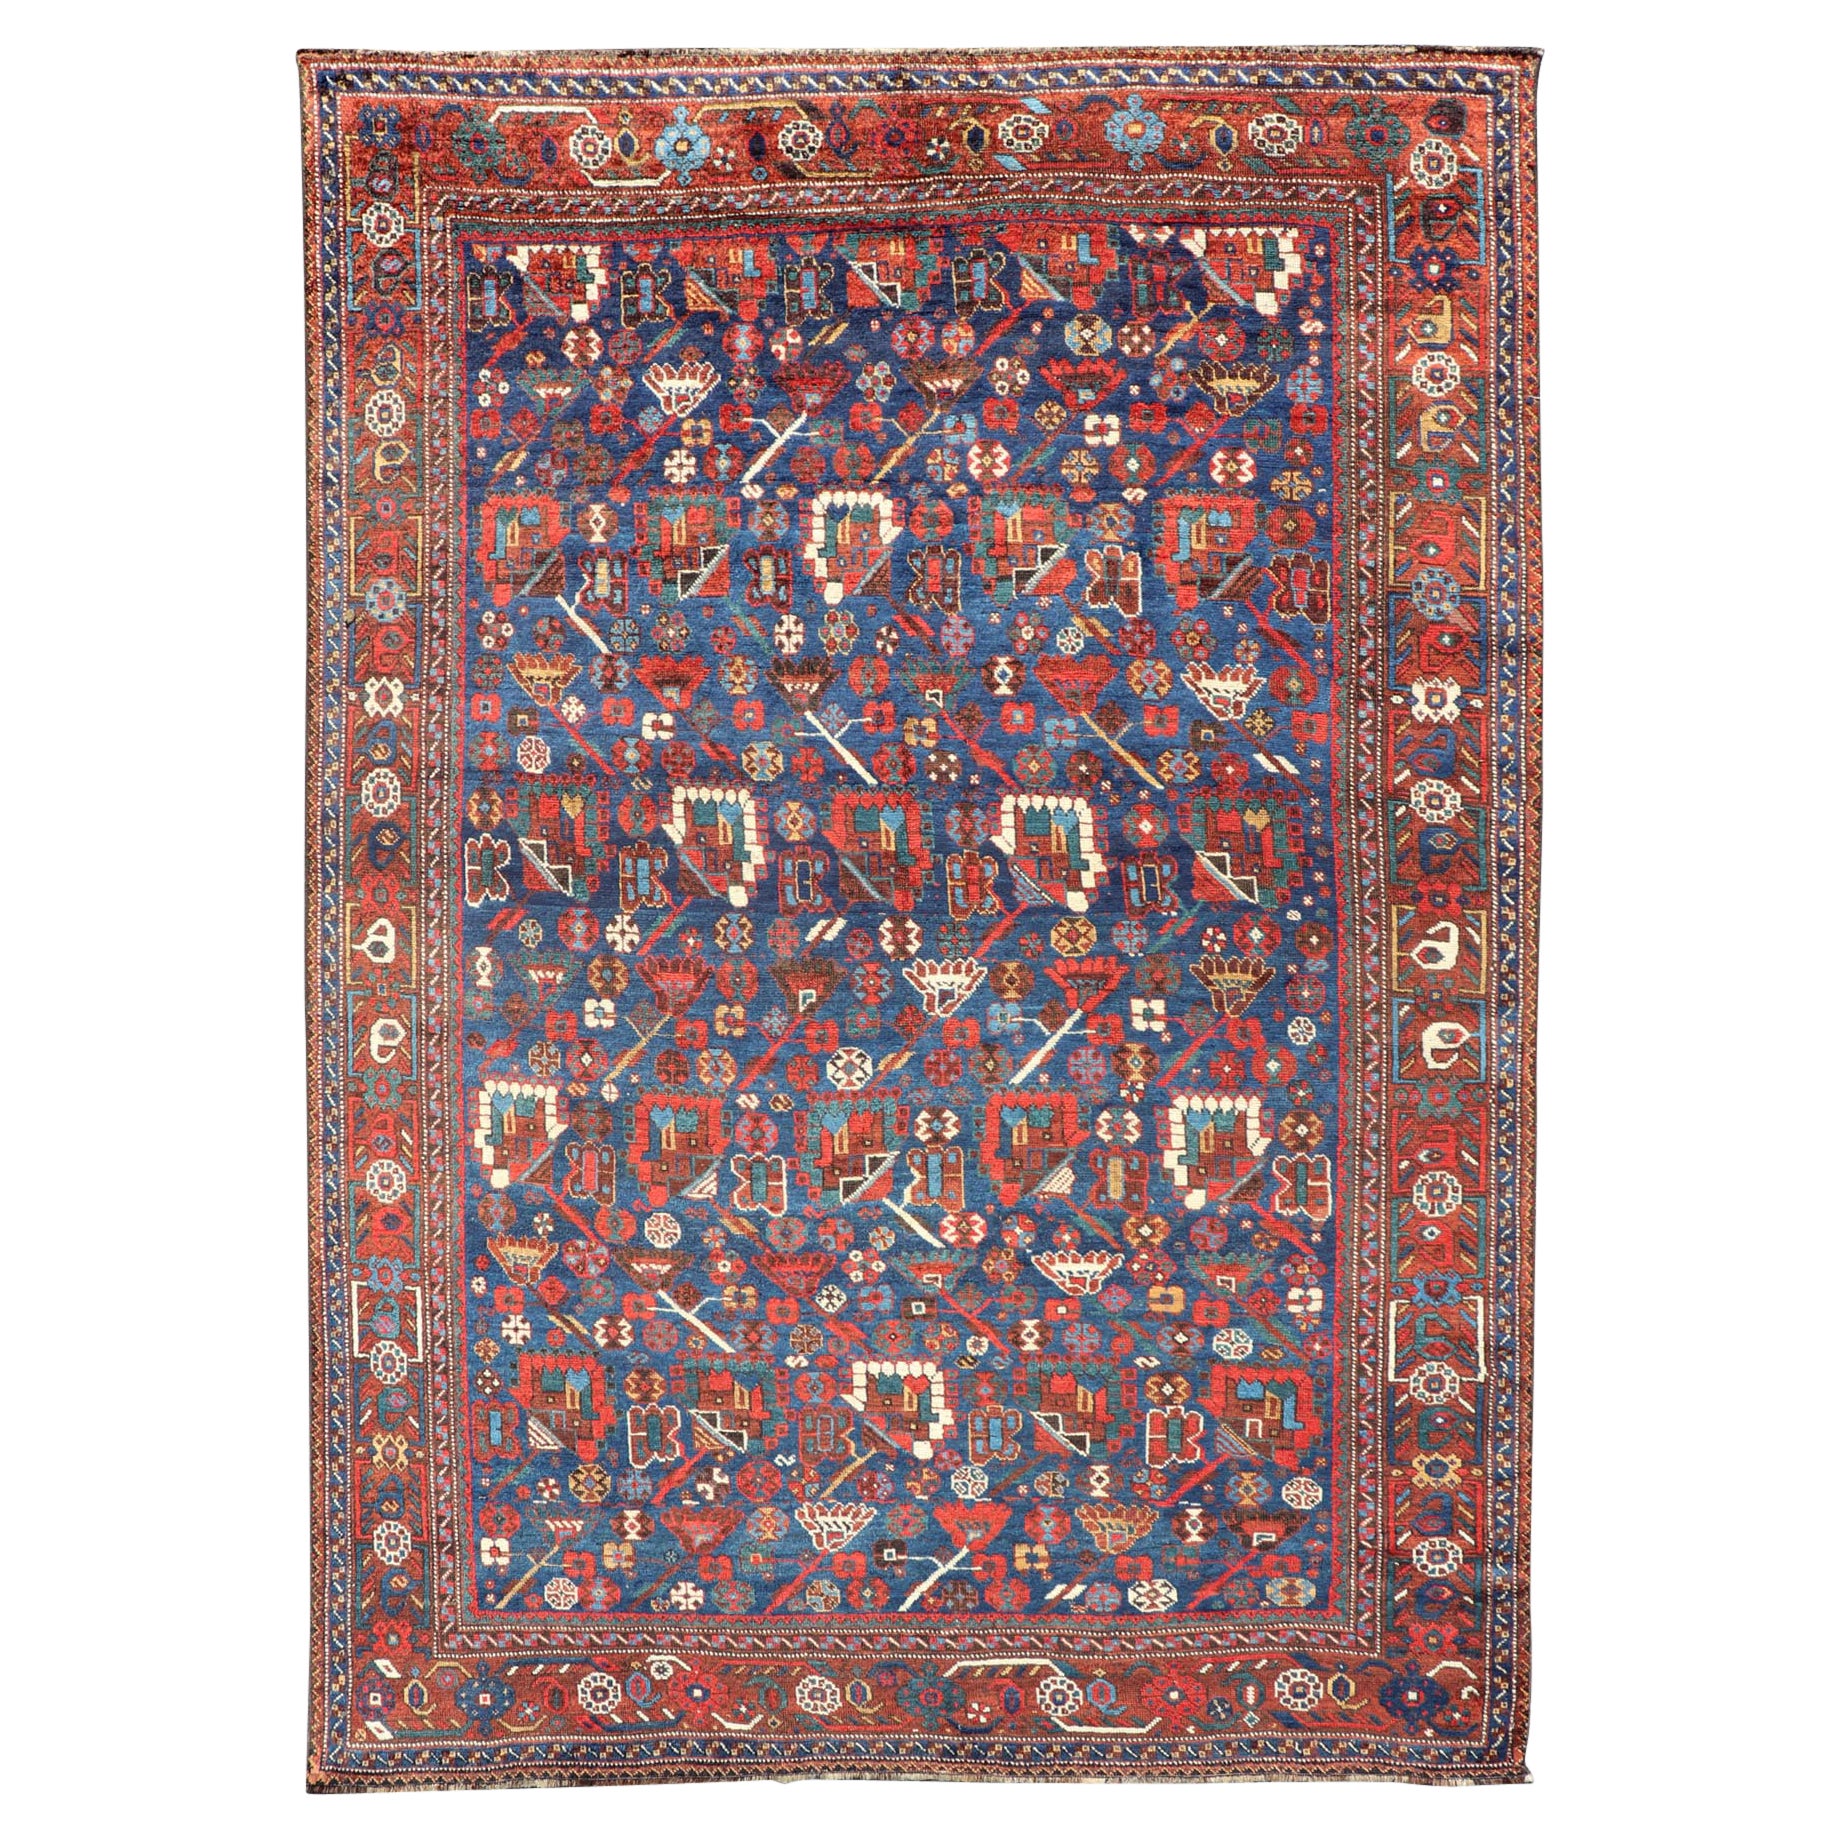 Ancien tapis persan Qashqai Shiraz tribal avec motif tribal sur toute sa surface